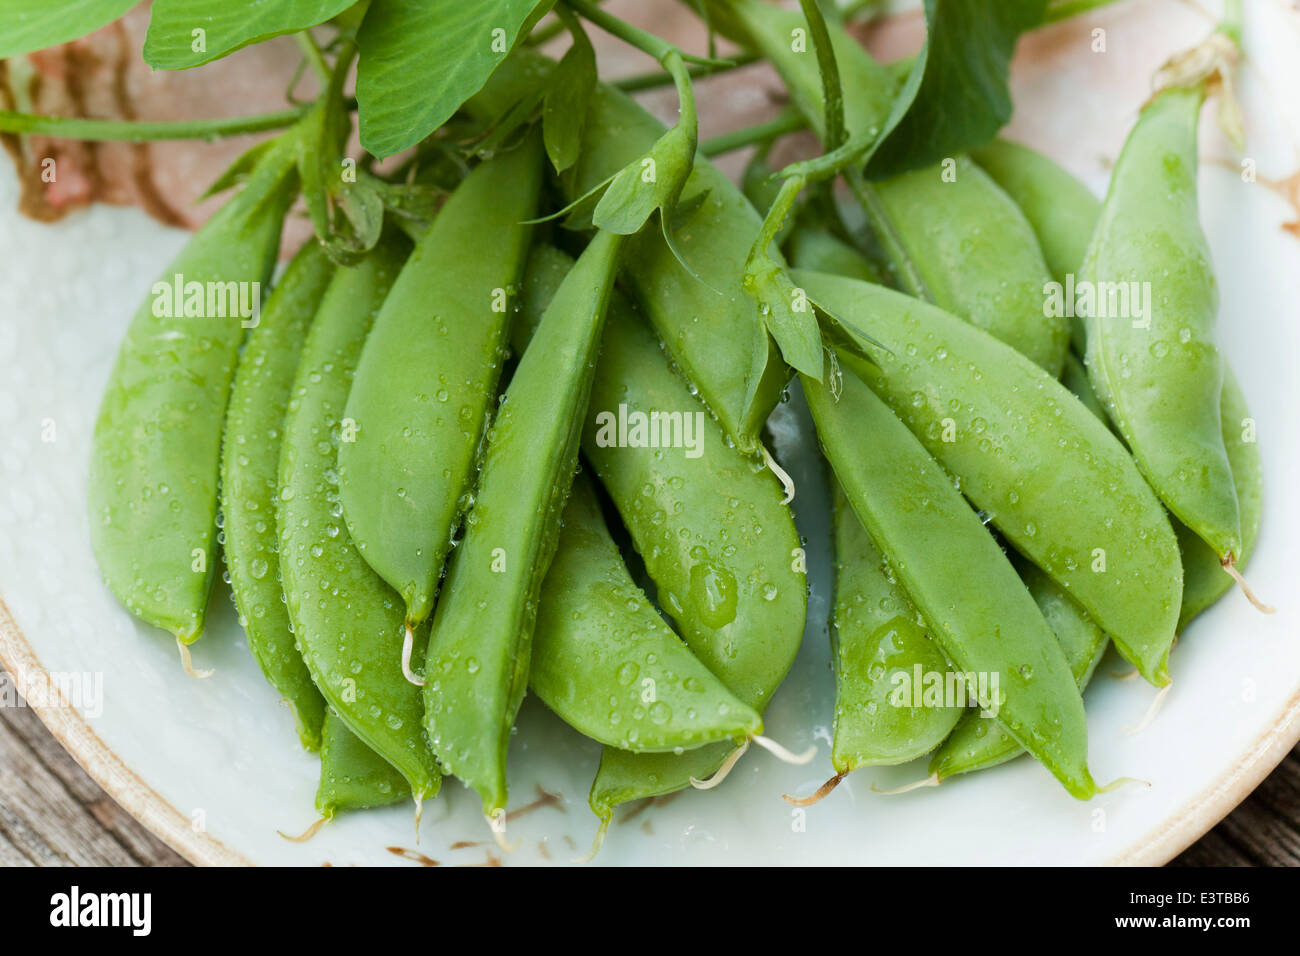 Freshly picked peas on plate Stock Photo